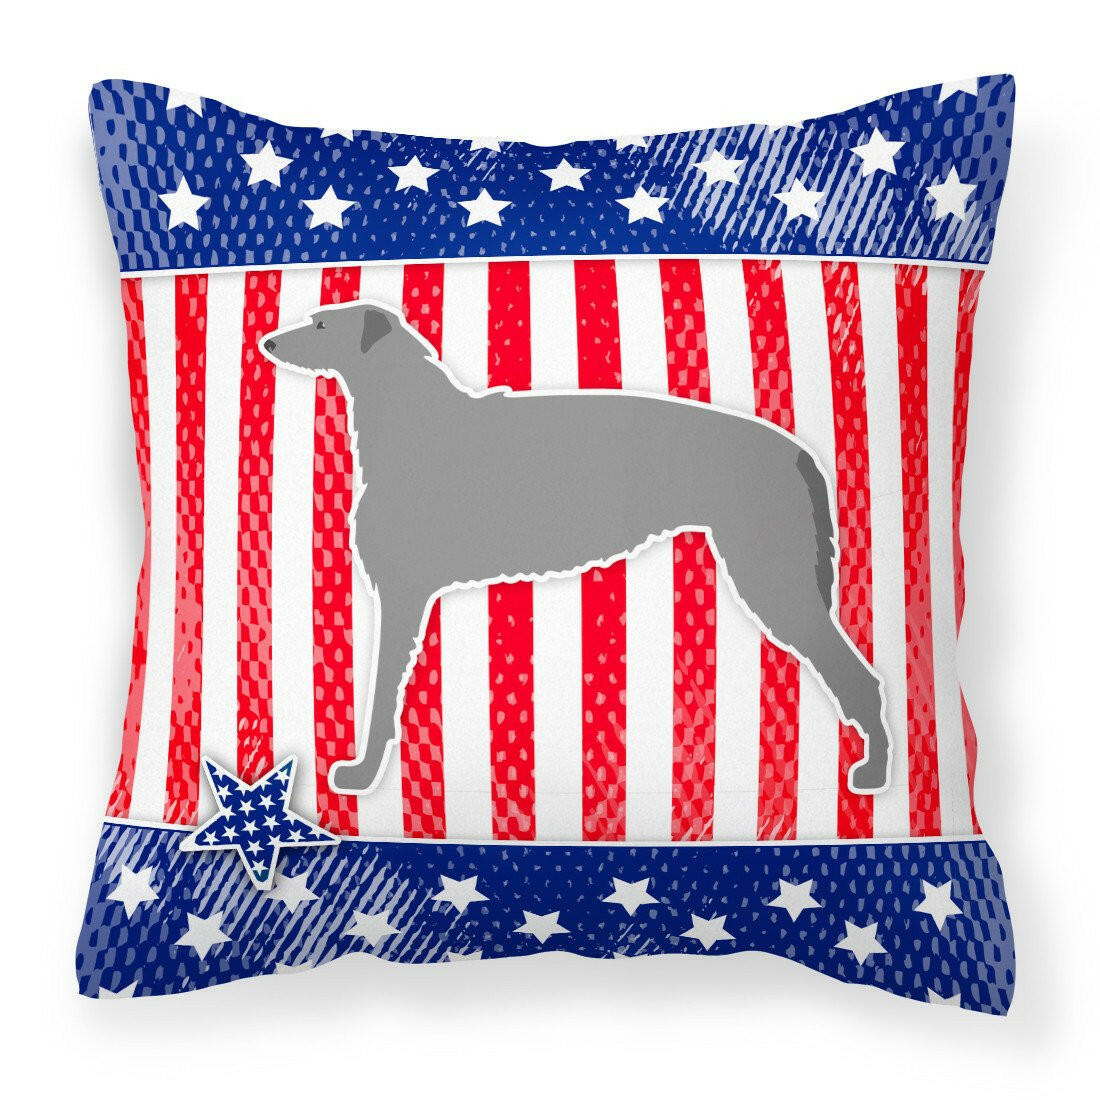 USA Patriotic Scottish Deerhound Fabric Decorative Pillow BB3296PW1818 by Caroline's Treasures